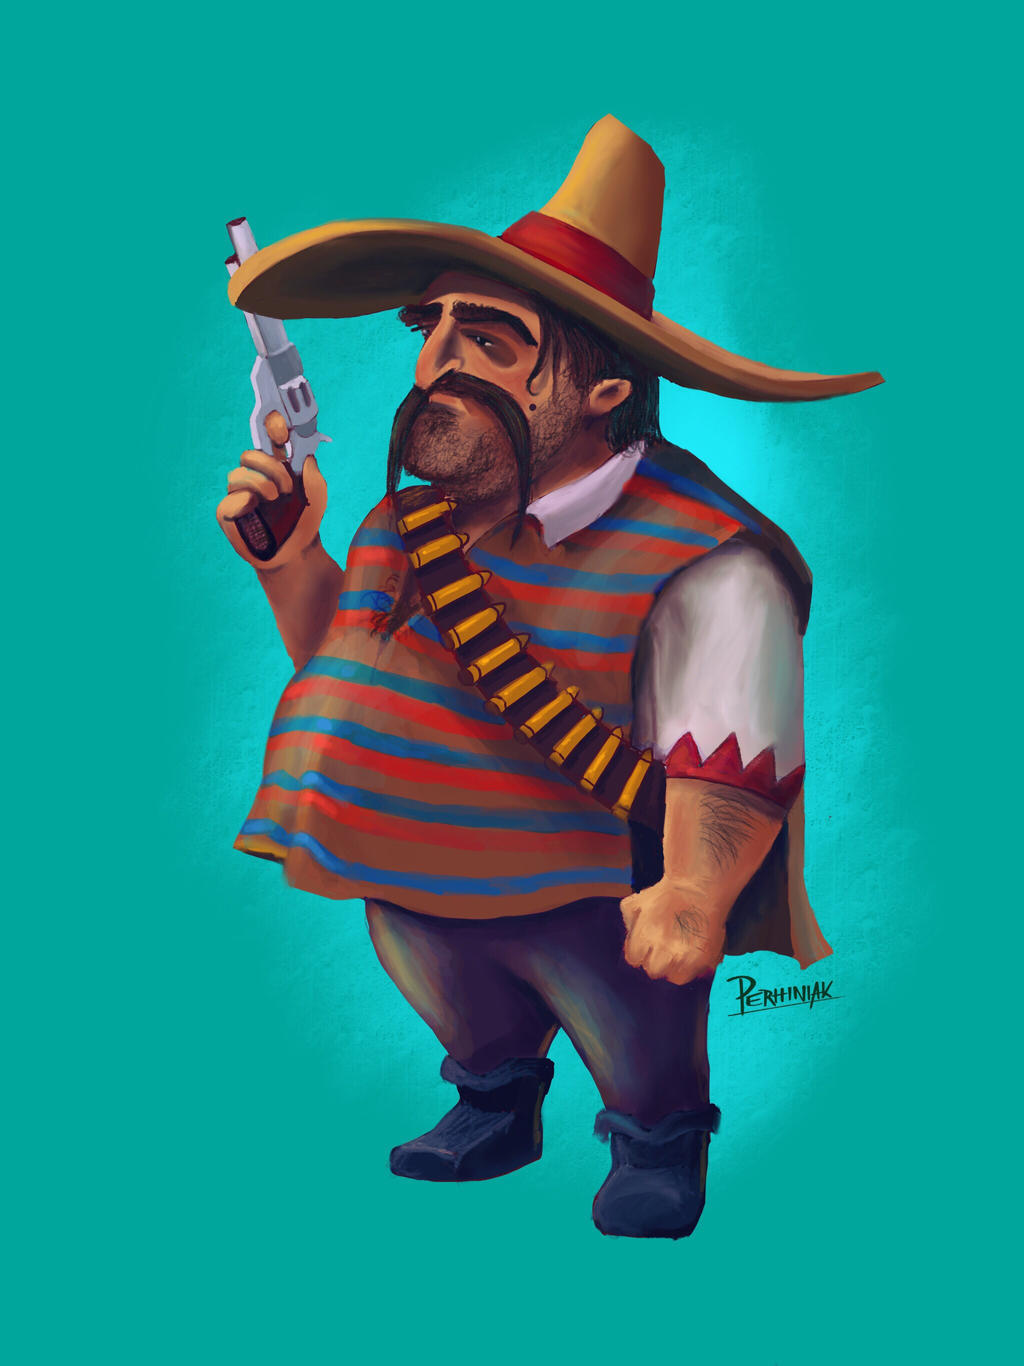 Mexican bandit by perhiniak on DeviantArt